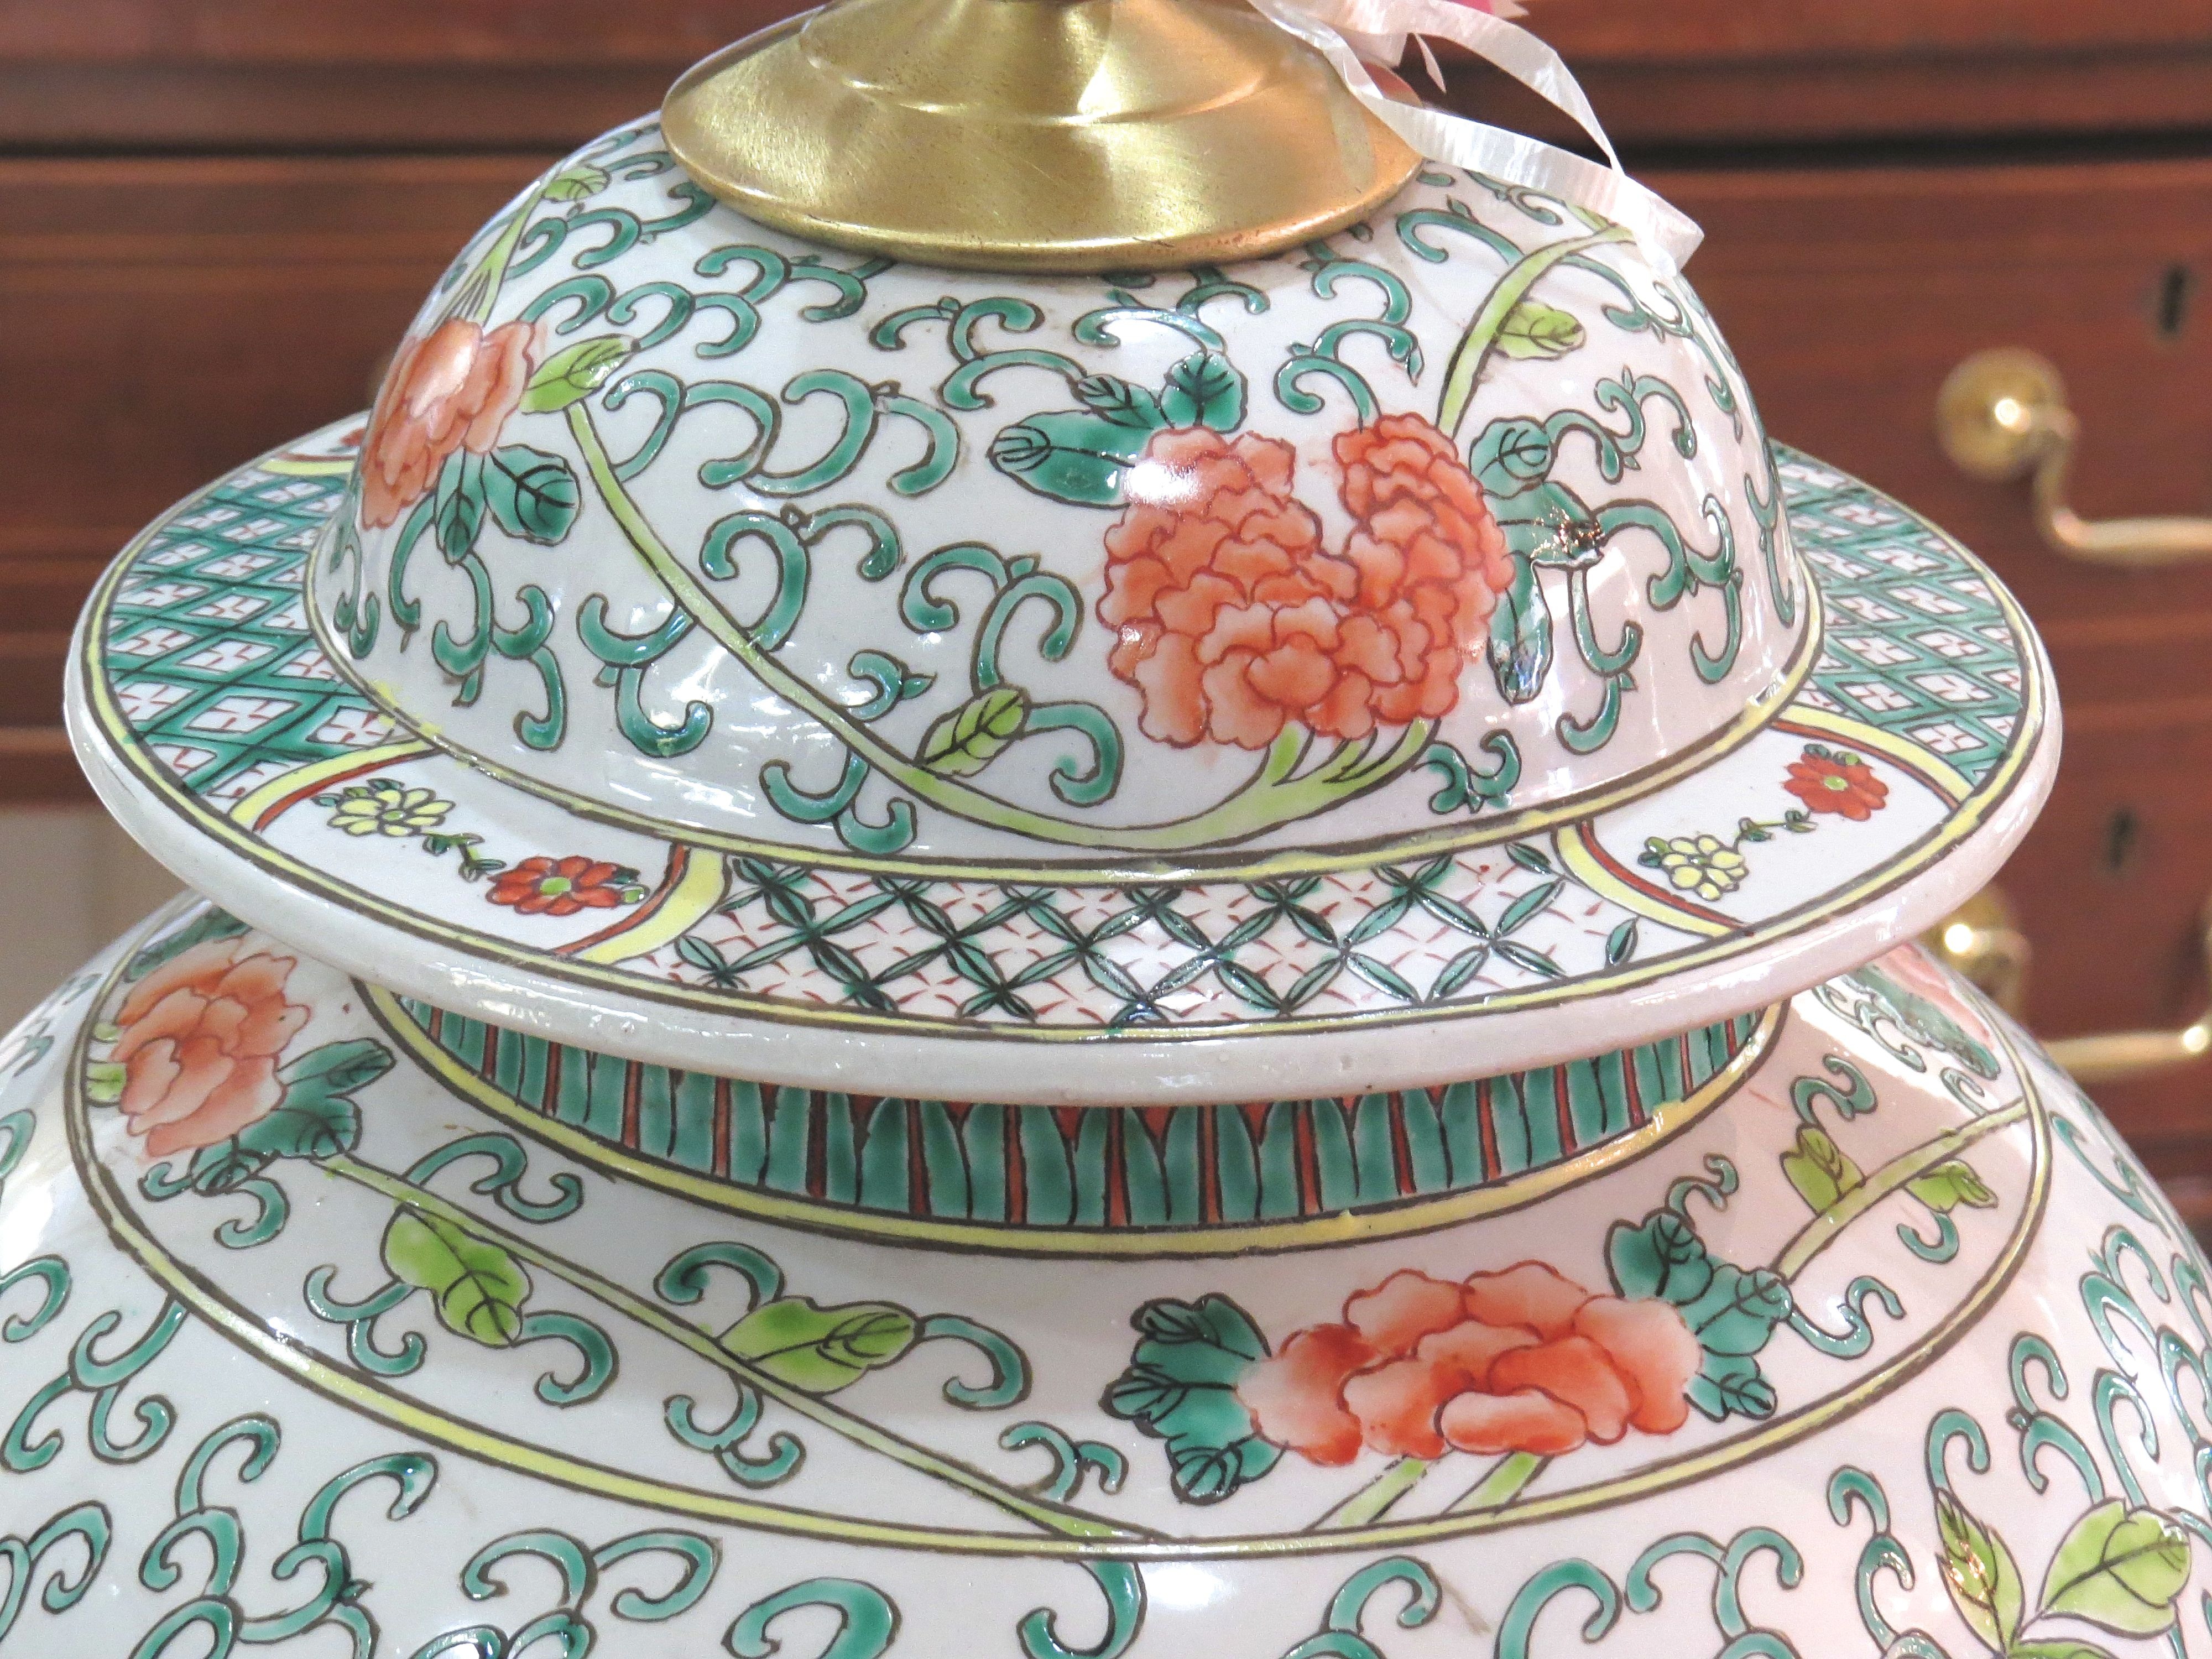 Chinese Porcelain Ginger Jar Lamp